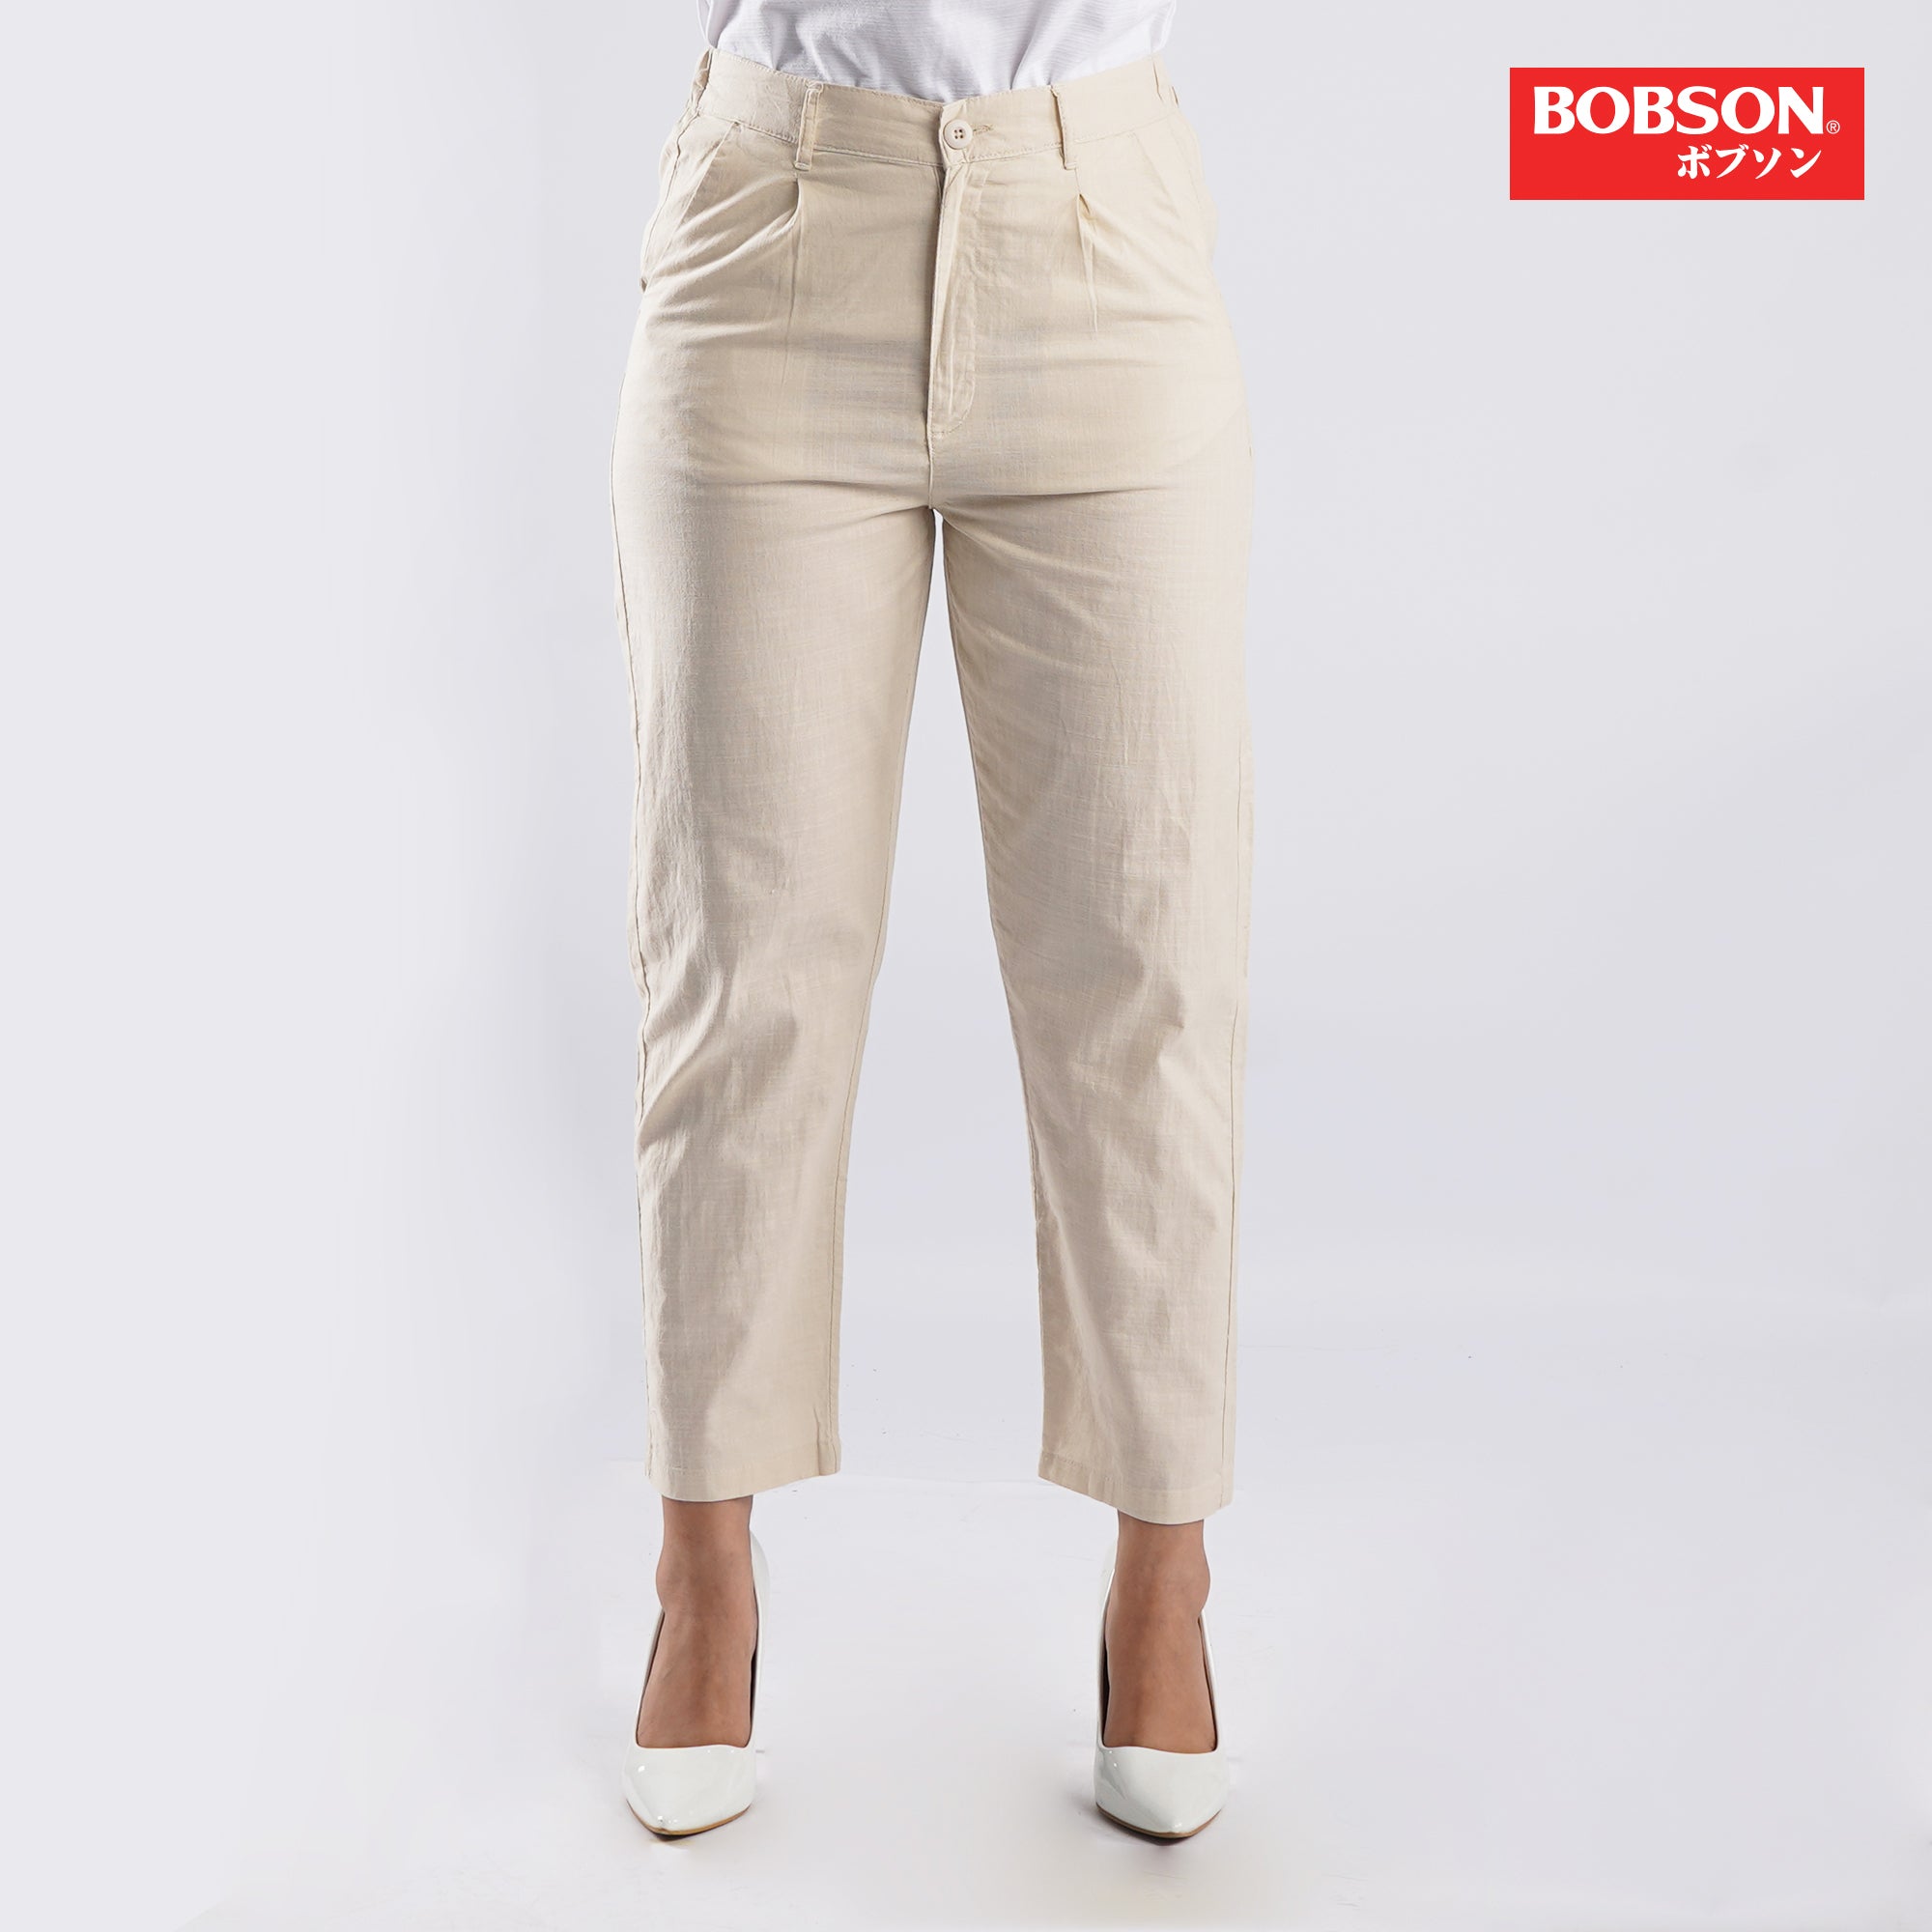 Bobson Ladies Basic Non-Denim Drawstring Candy Pants for Women Trendy –  Bobson ボブソン